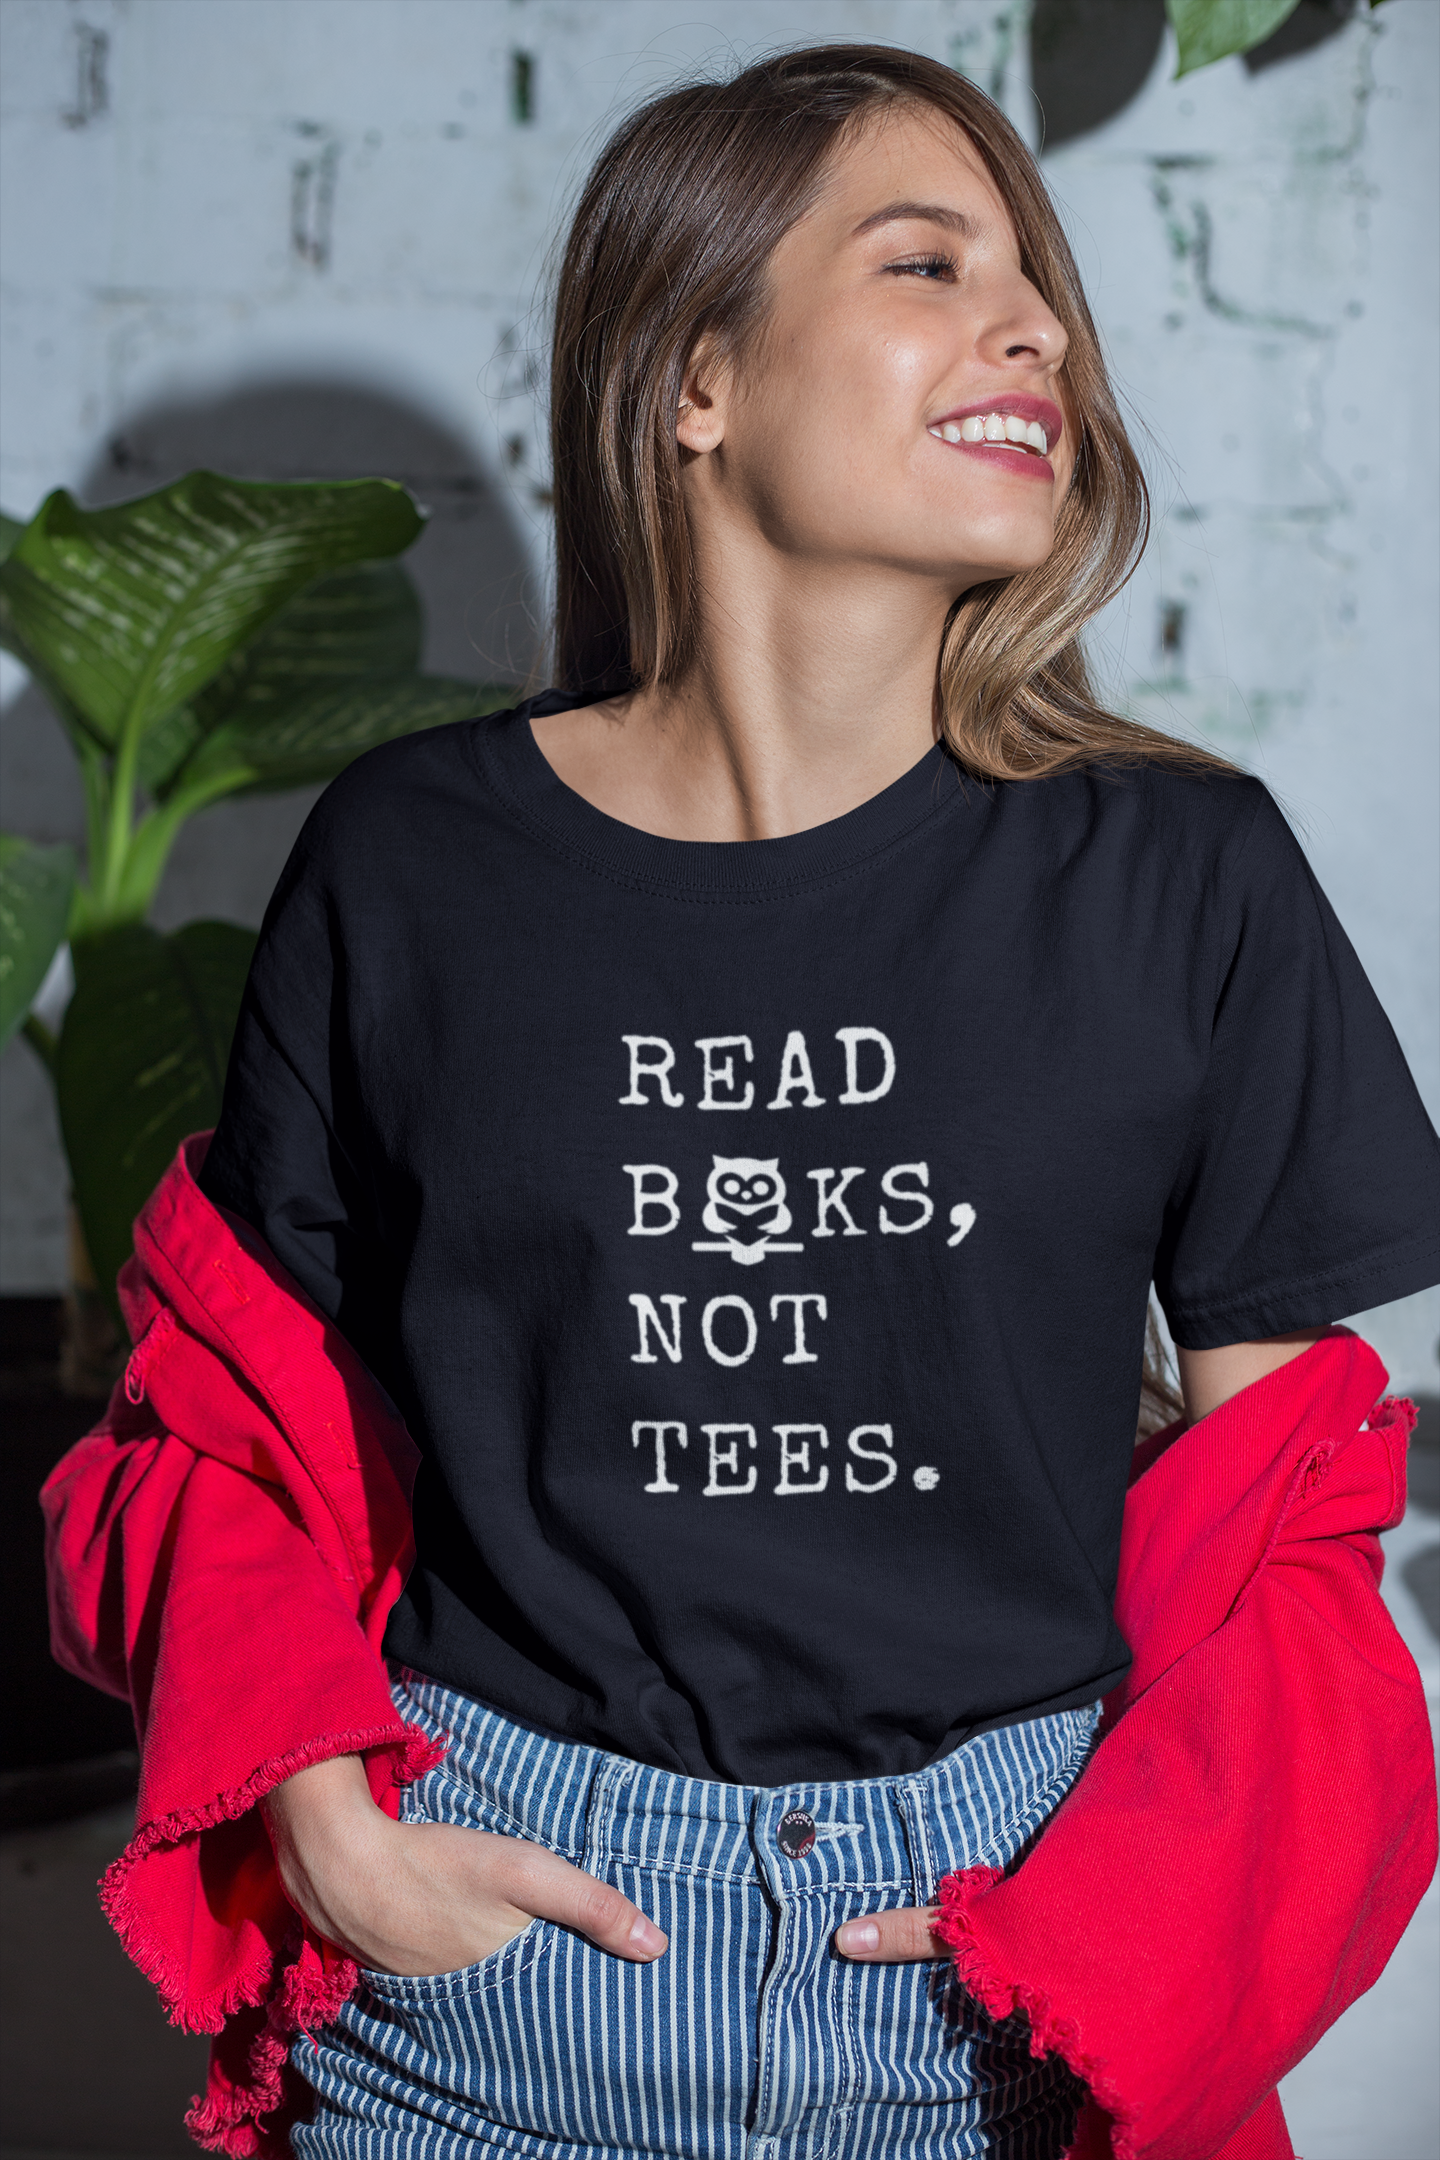 The Bookoholics Annual Trip T-shirt (Edition 1)